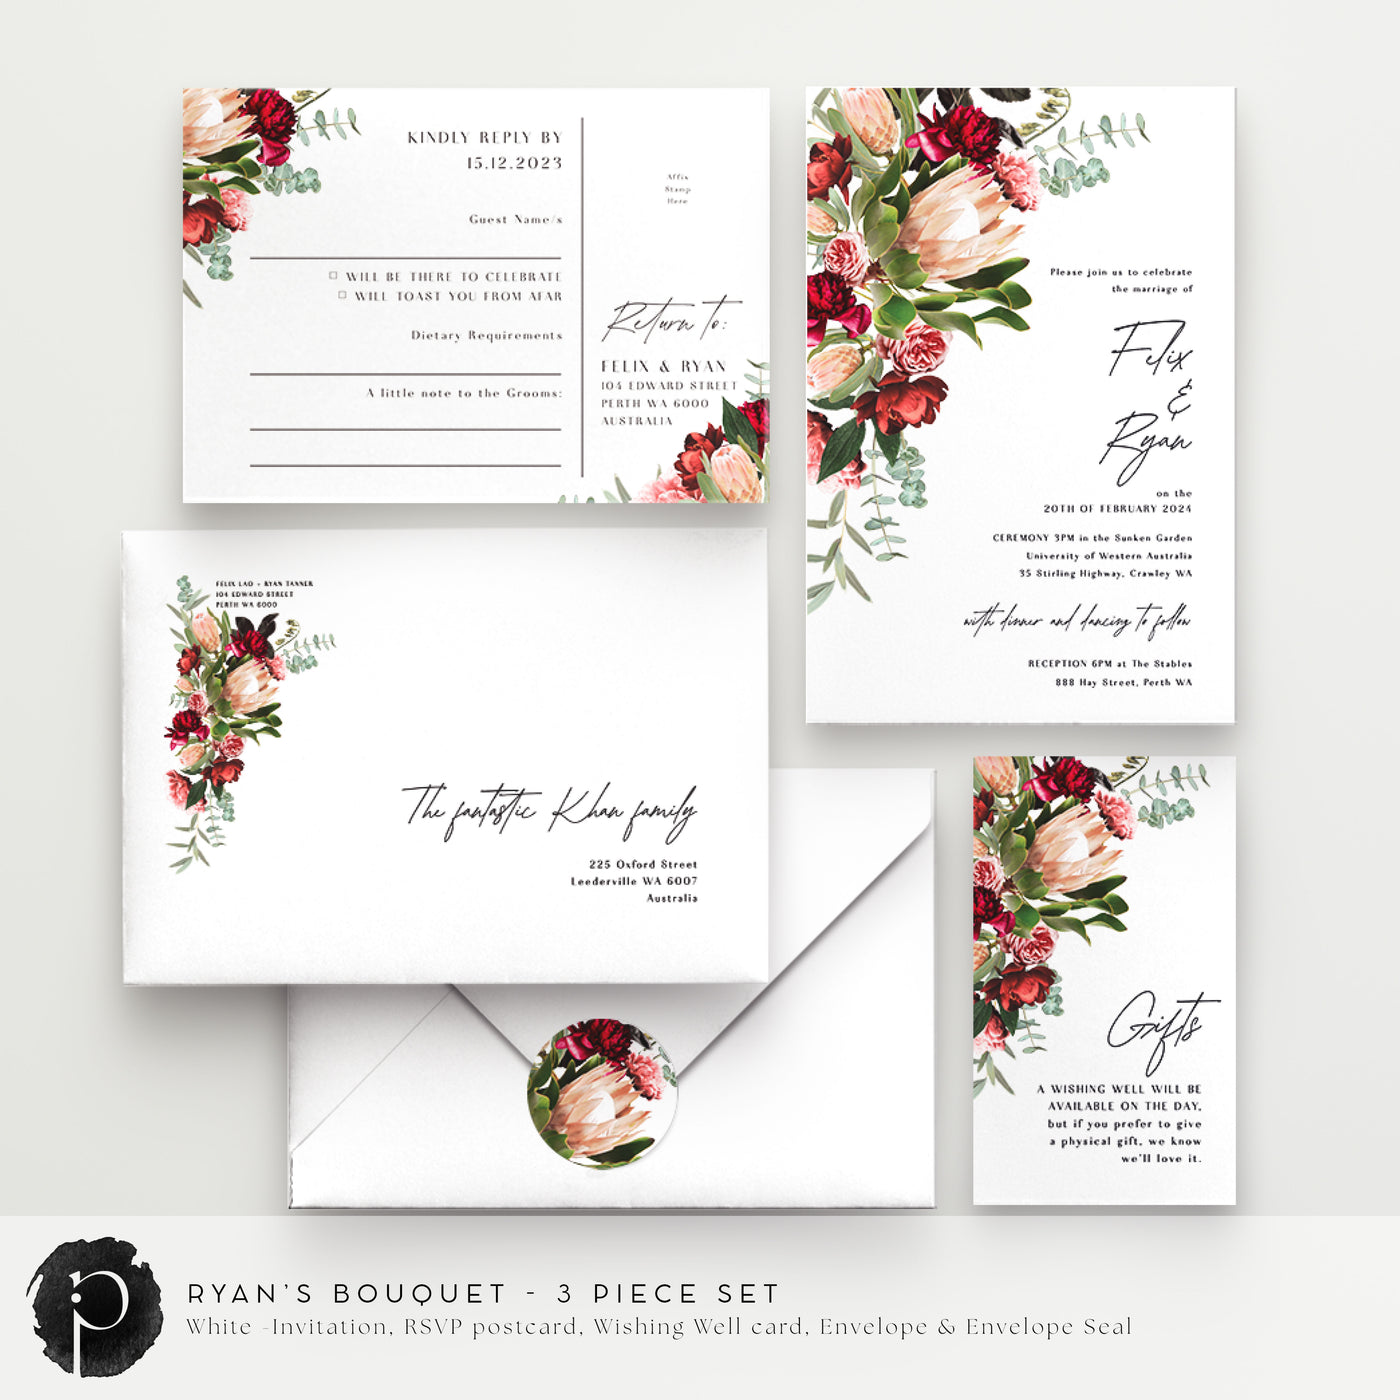 Ryan's Bouquet - Wedding Invitation, RSVP Card & Gift/Wishing Well Card Set